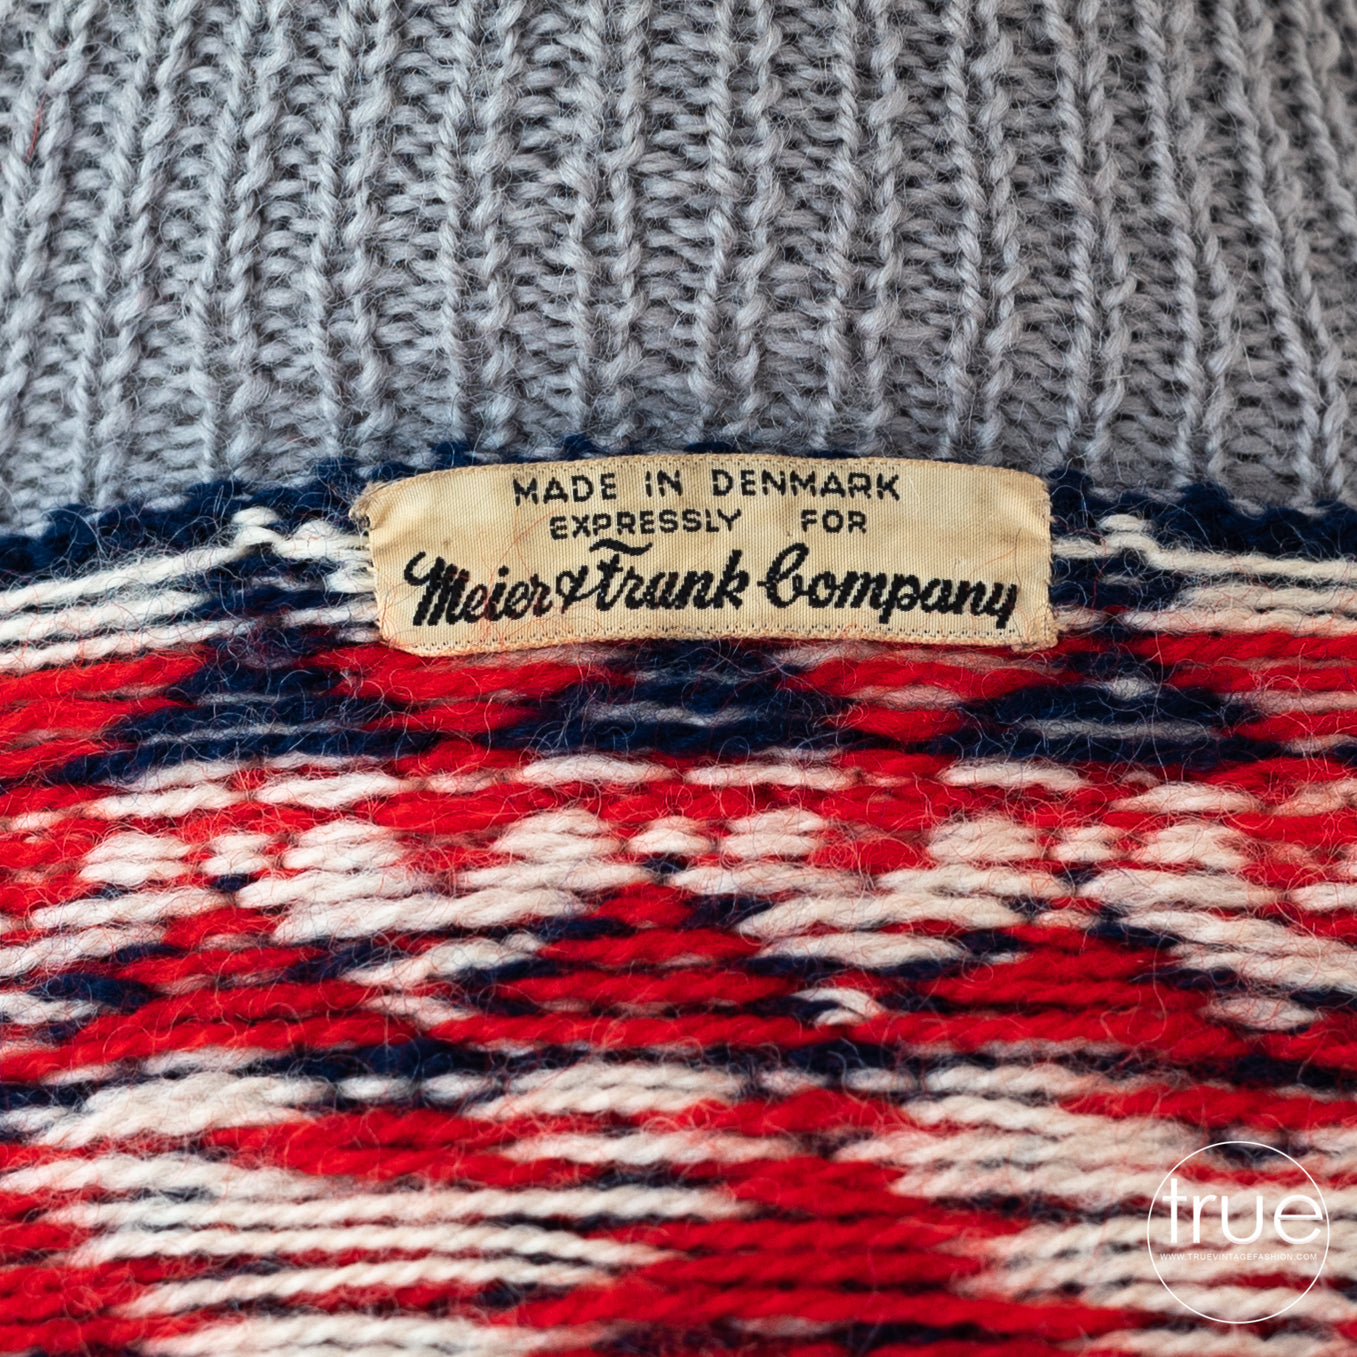 vintage 1940's sweater ...classic danish Paul Mage for Meier & Frank ski sweater